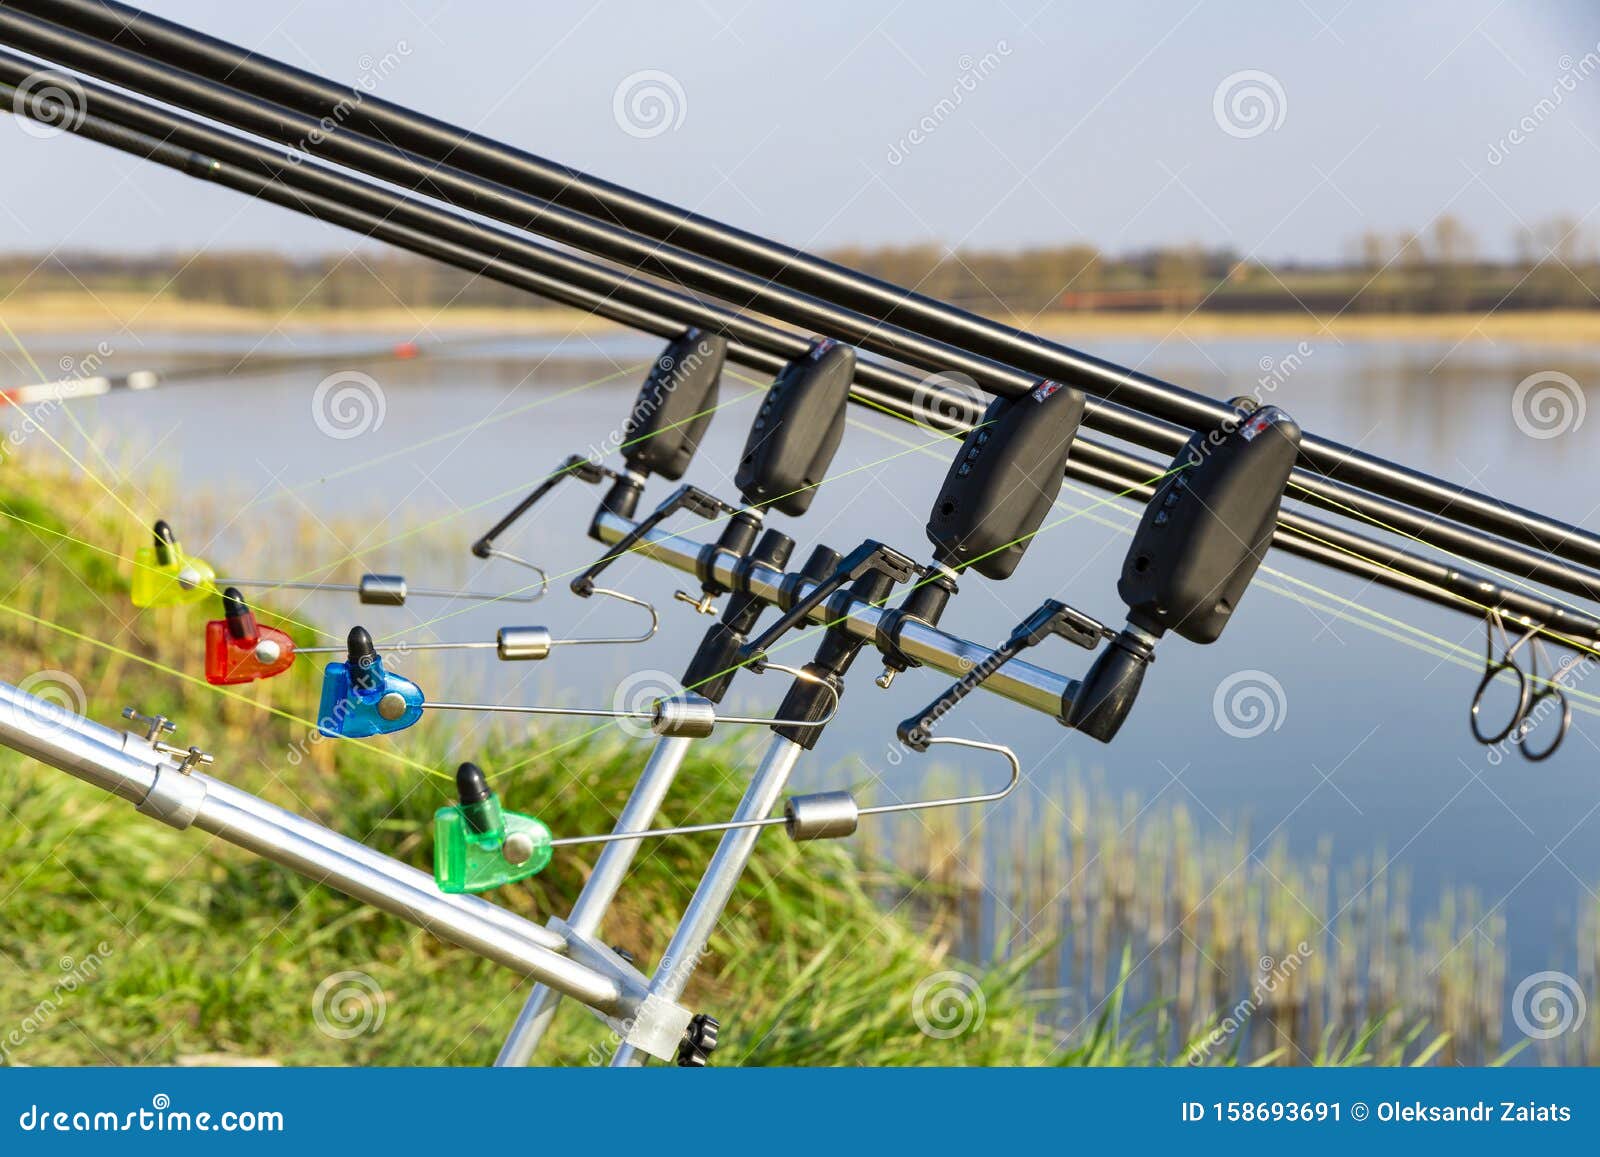 Carp Fishing Rods with Carp Bite Indicators Set Up on Rod Pod Near Lake  River. Fishing during Sunset Stock Image - Image of catching, bright:  158693691